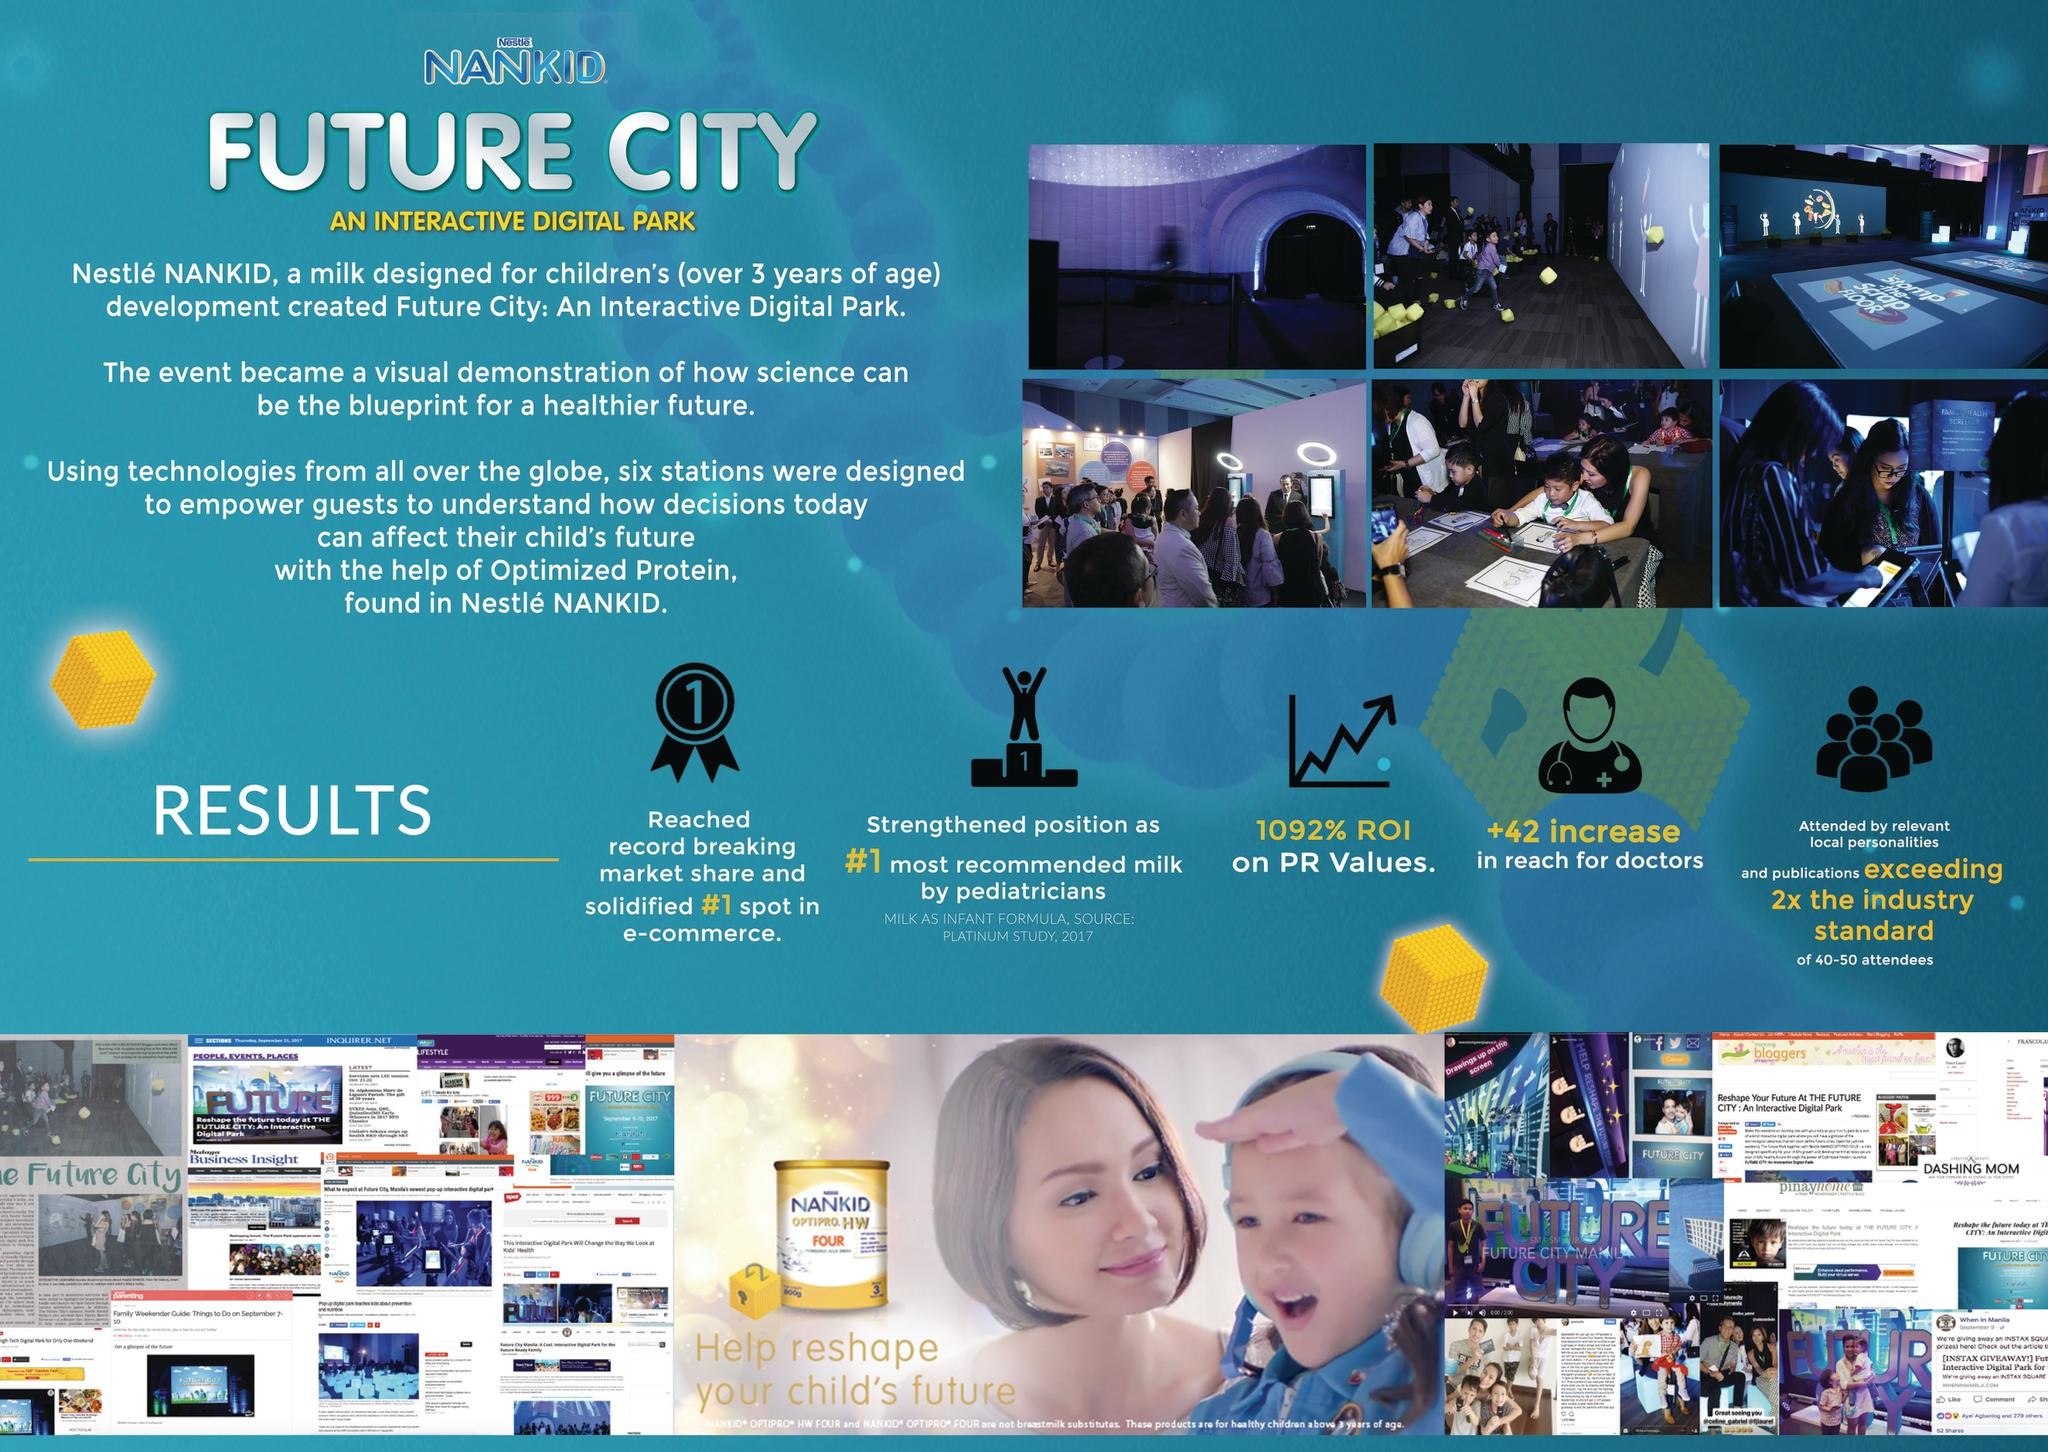 Nestlé NANKID Future City: An Interactive Digital Park